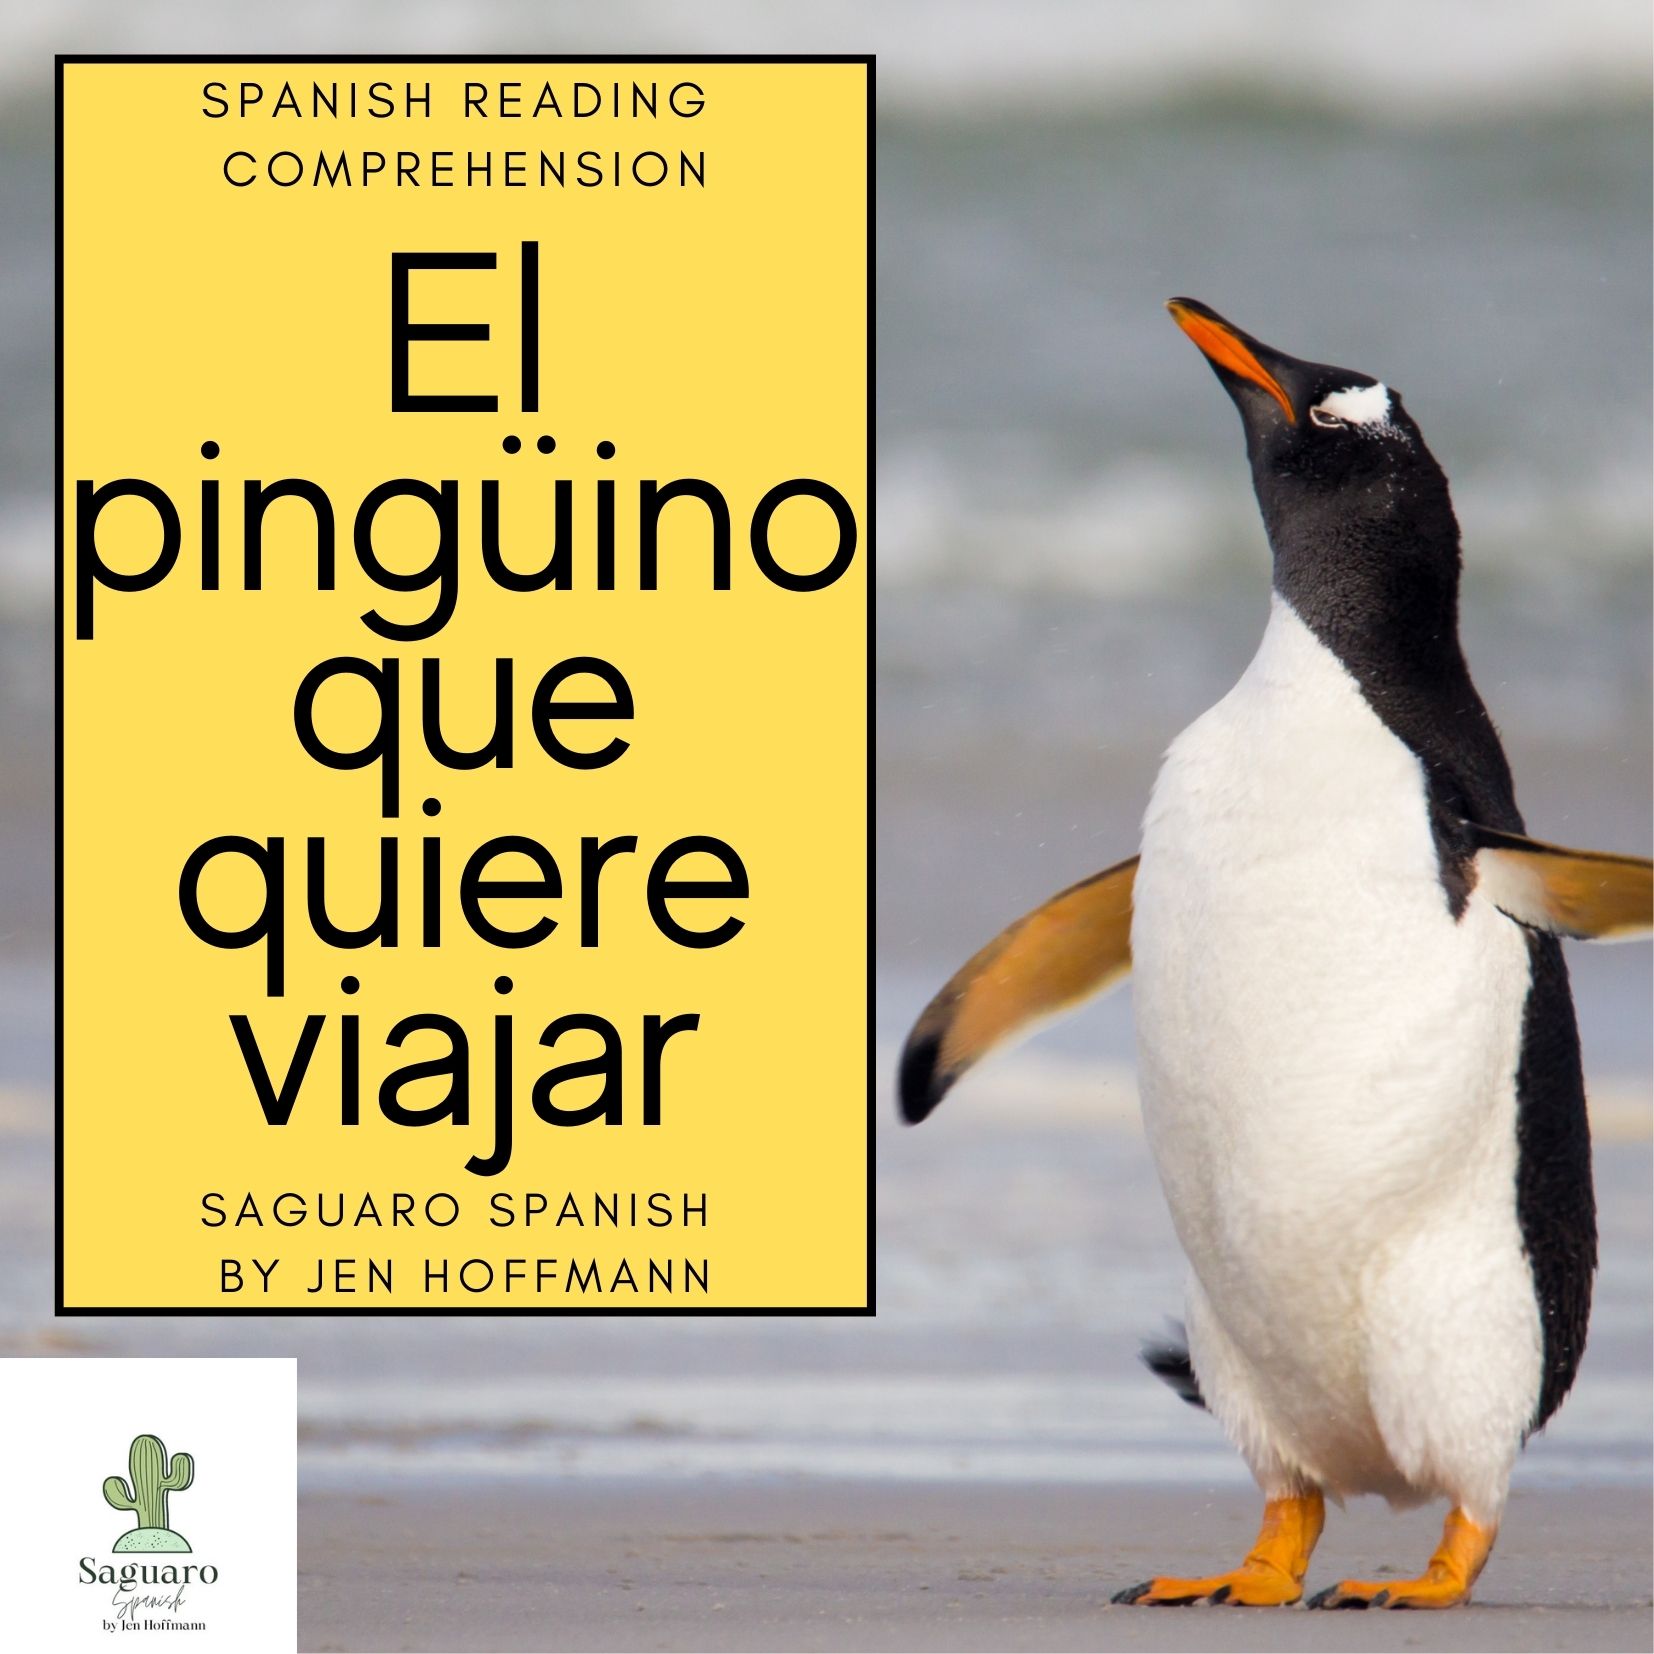 Spanish (CI) Reading Comprehension Story and Worksheet : El pingüino (poder, querer)